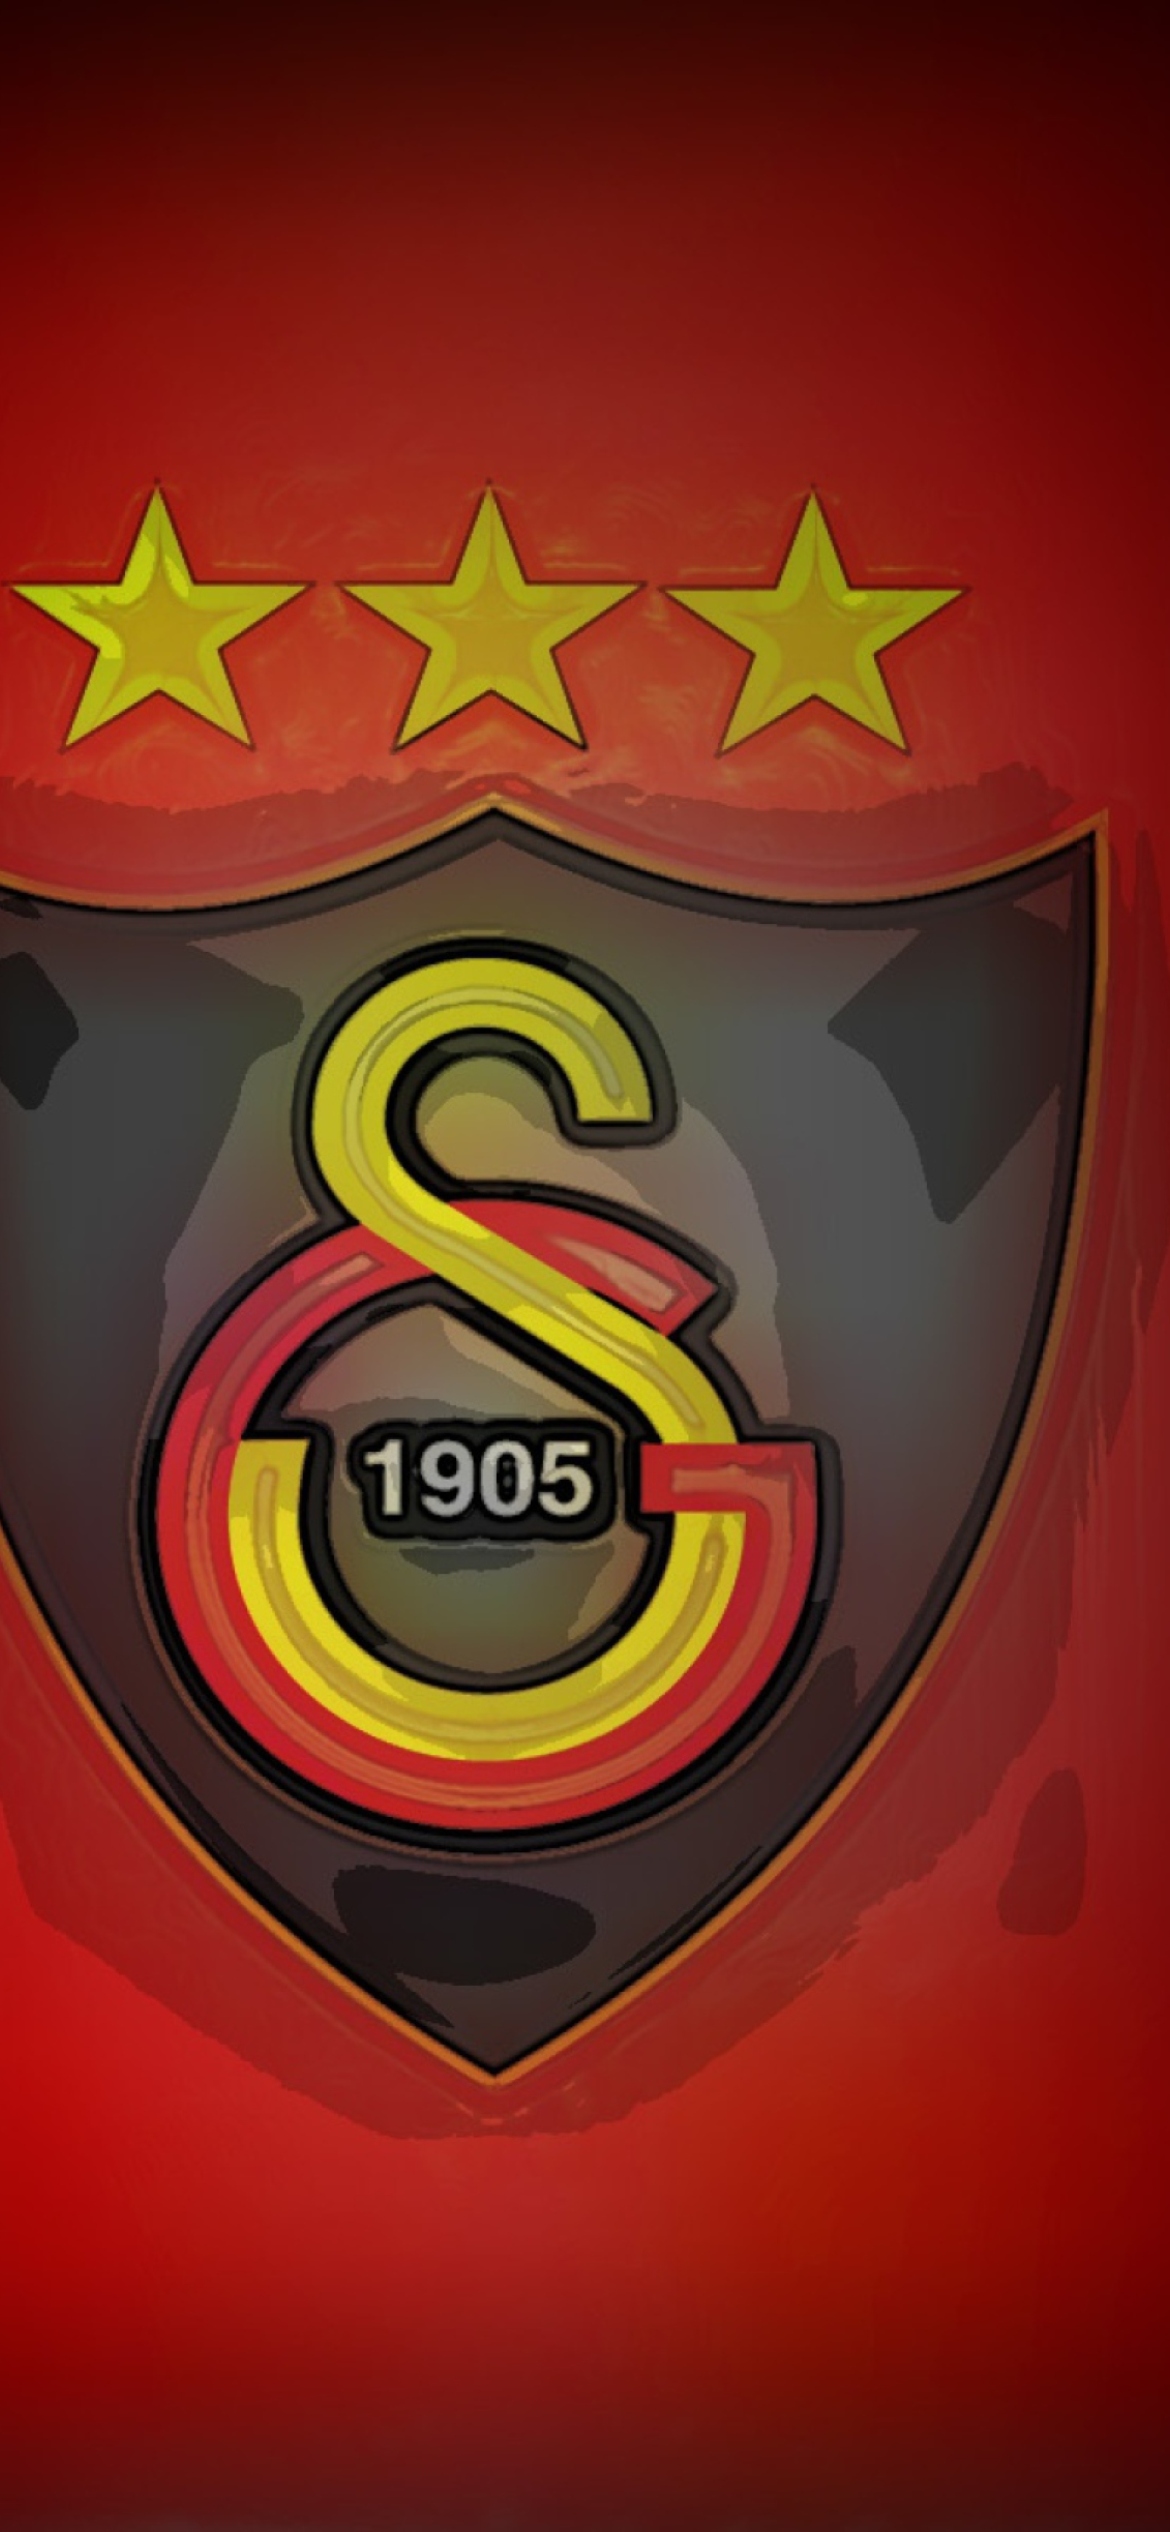 Galatasaray wallpaper 1170x2532